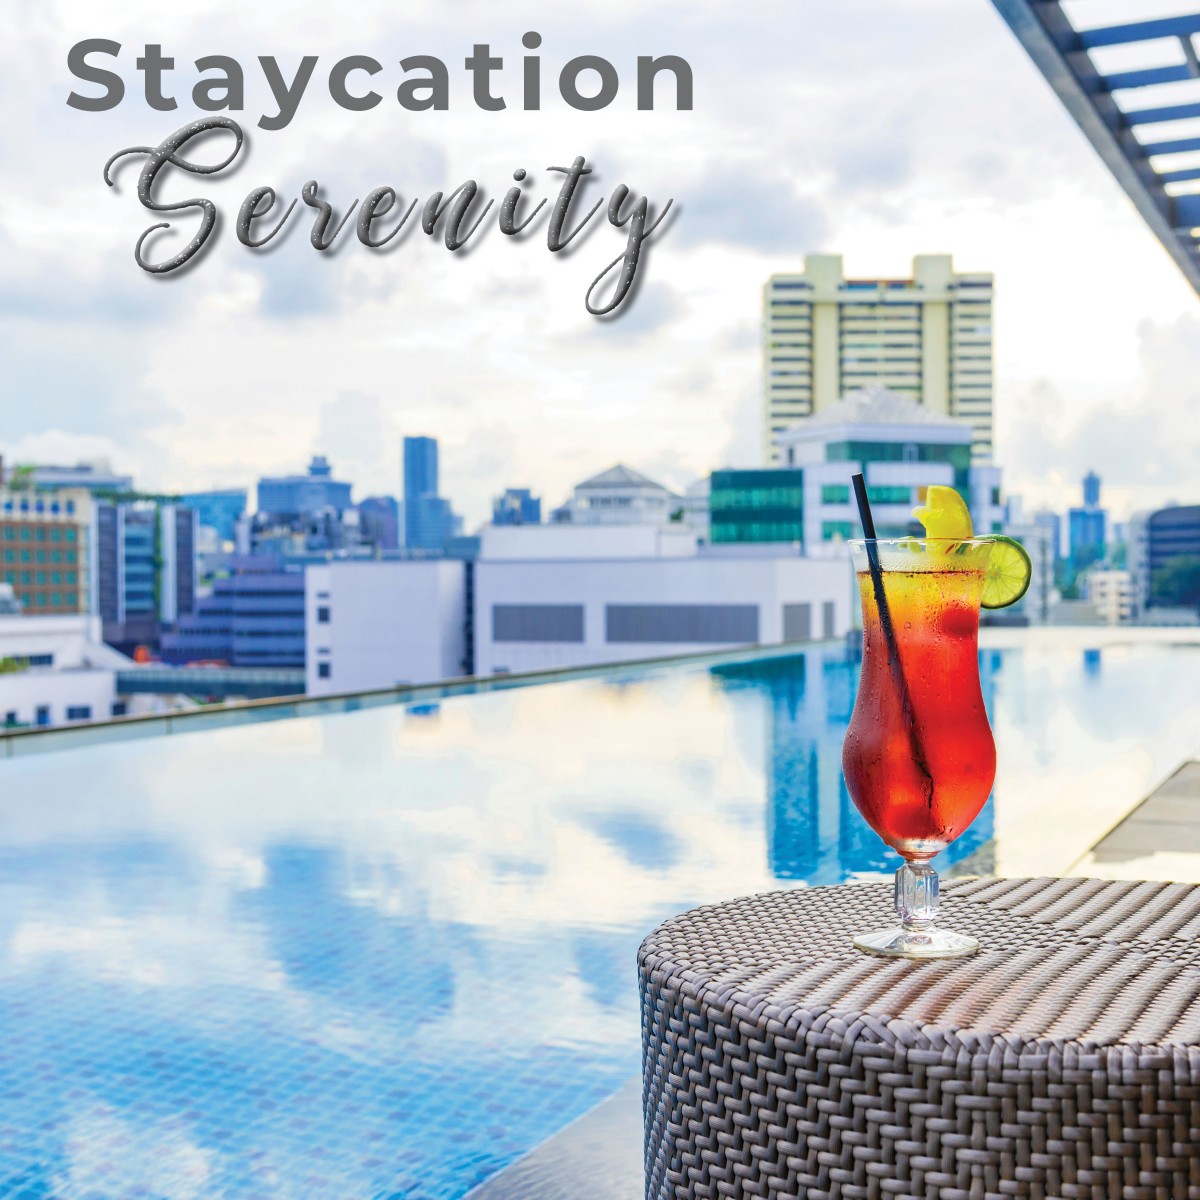 staycation-serenity